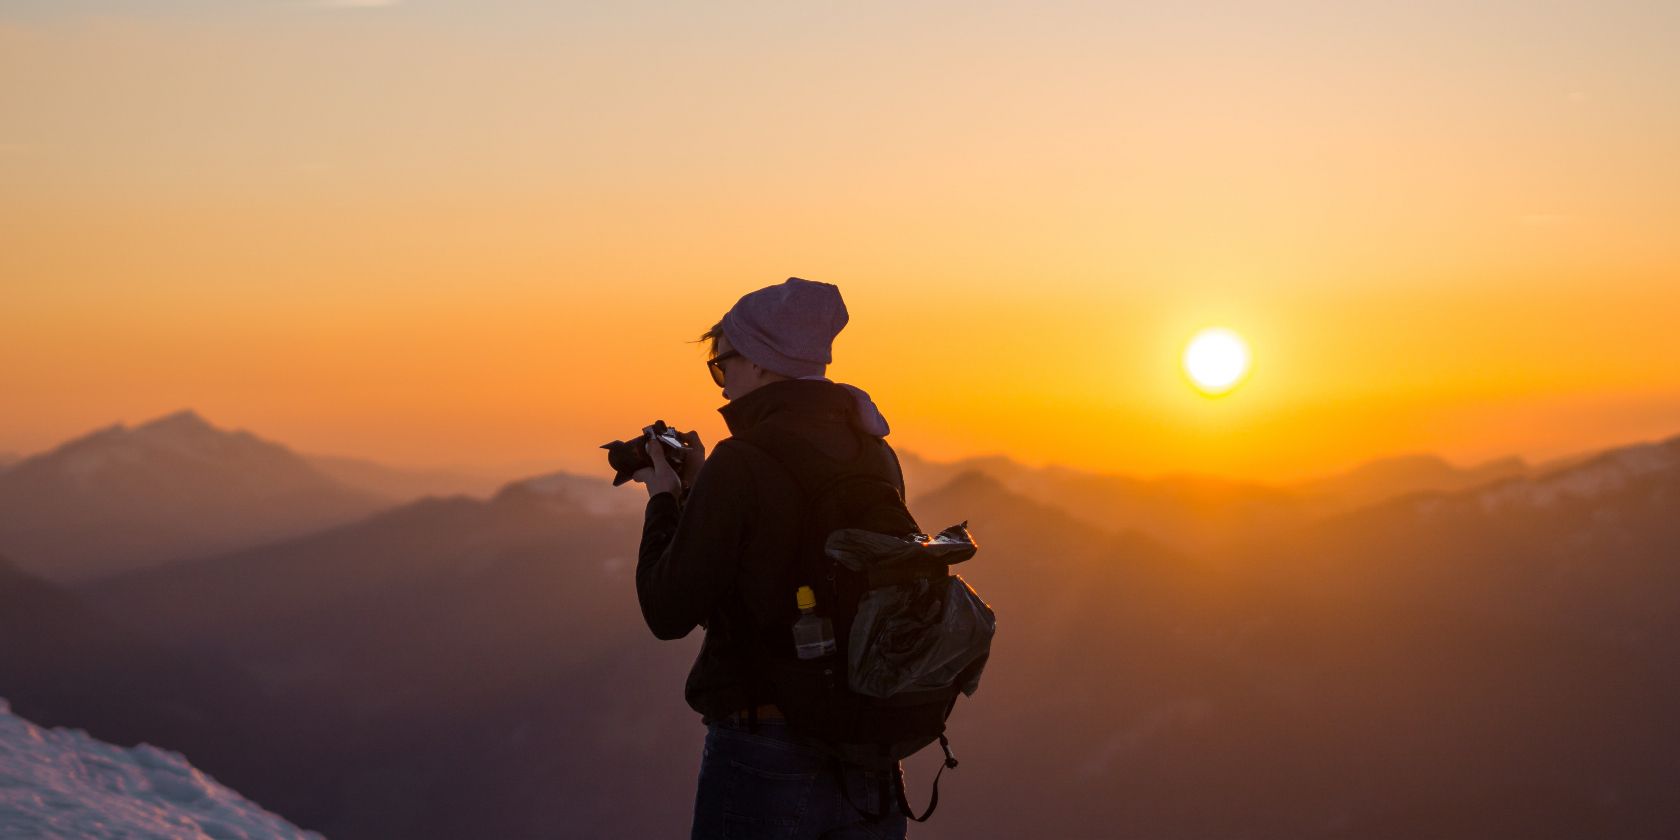 photo of someone taking photos in a mountain range